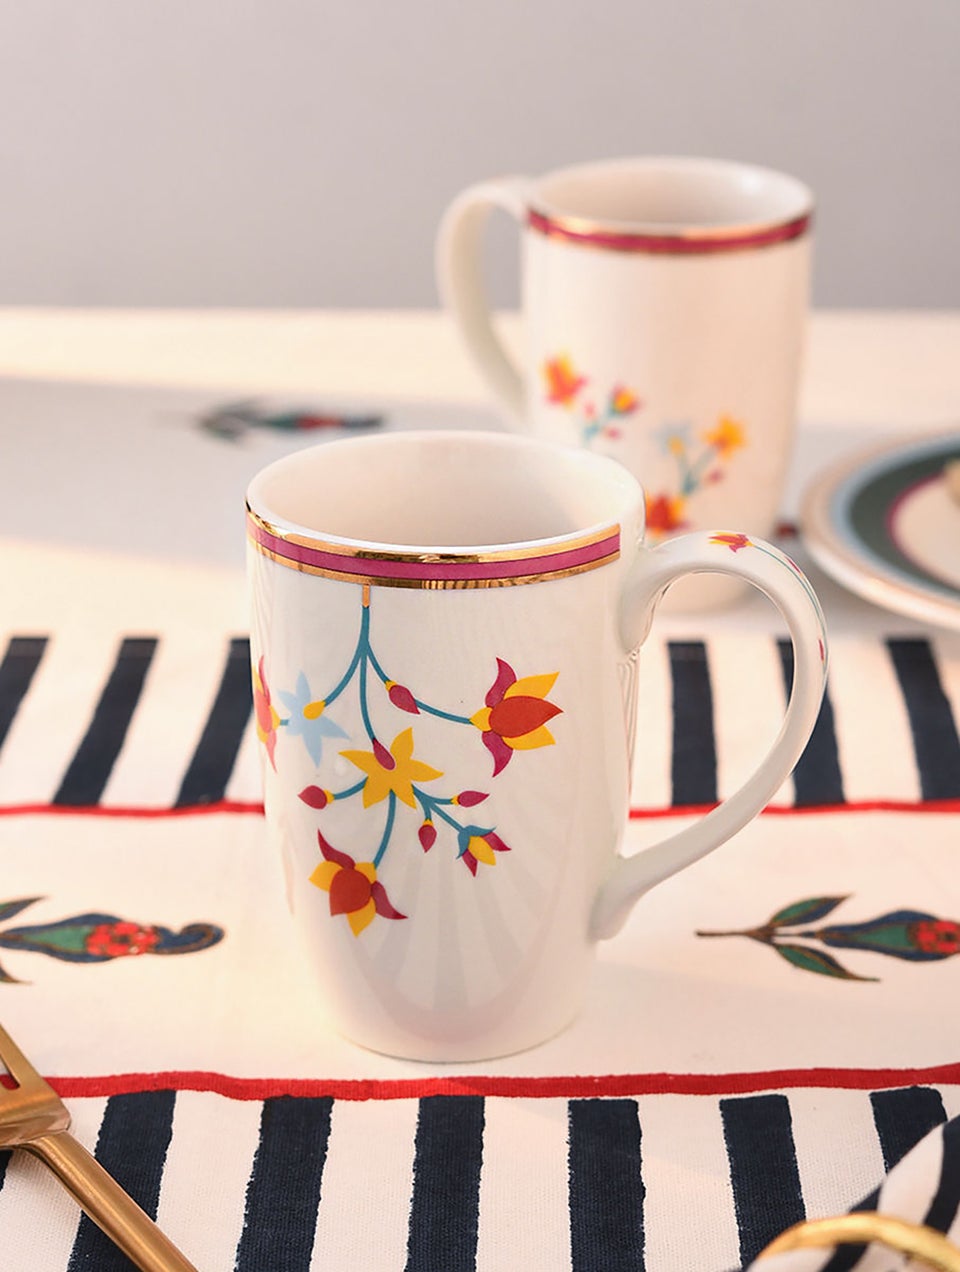 Handcrafted Porcelain Paithan Coffee Mug With 24 Karat Gold Work